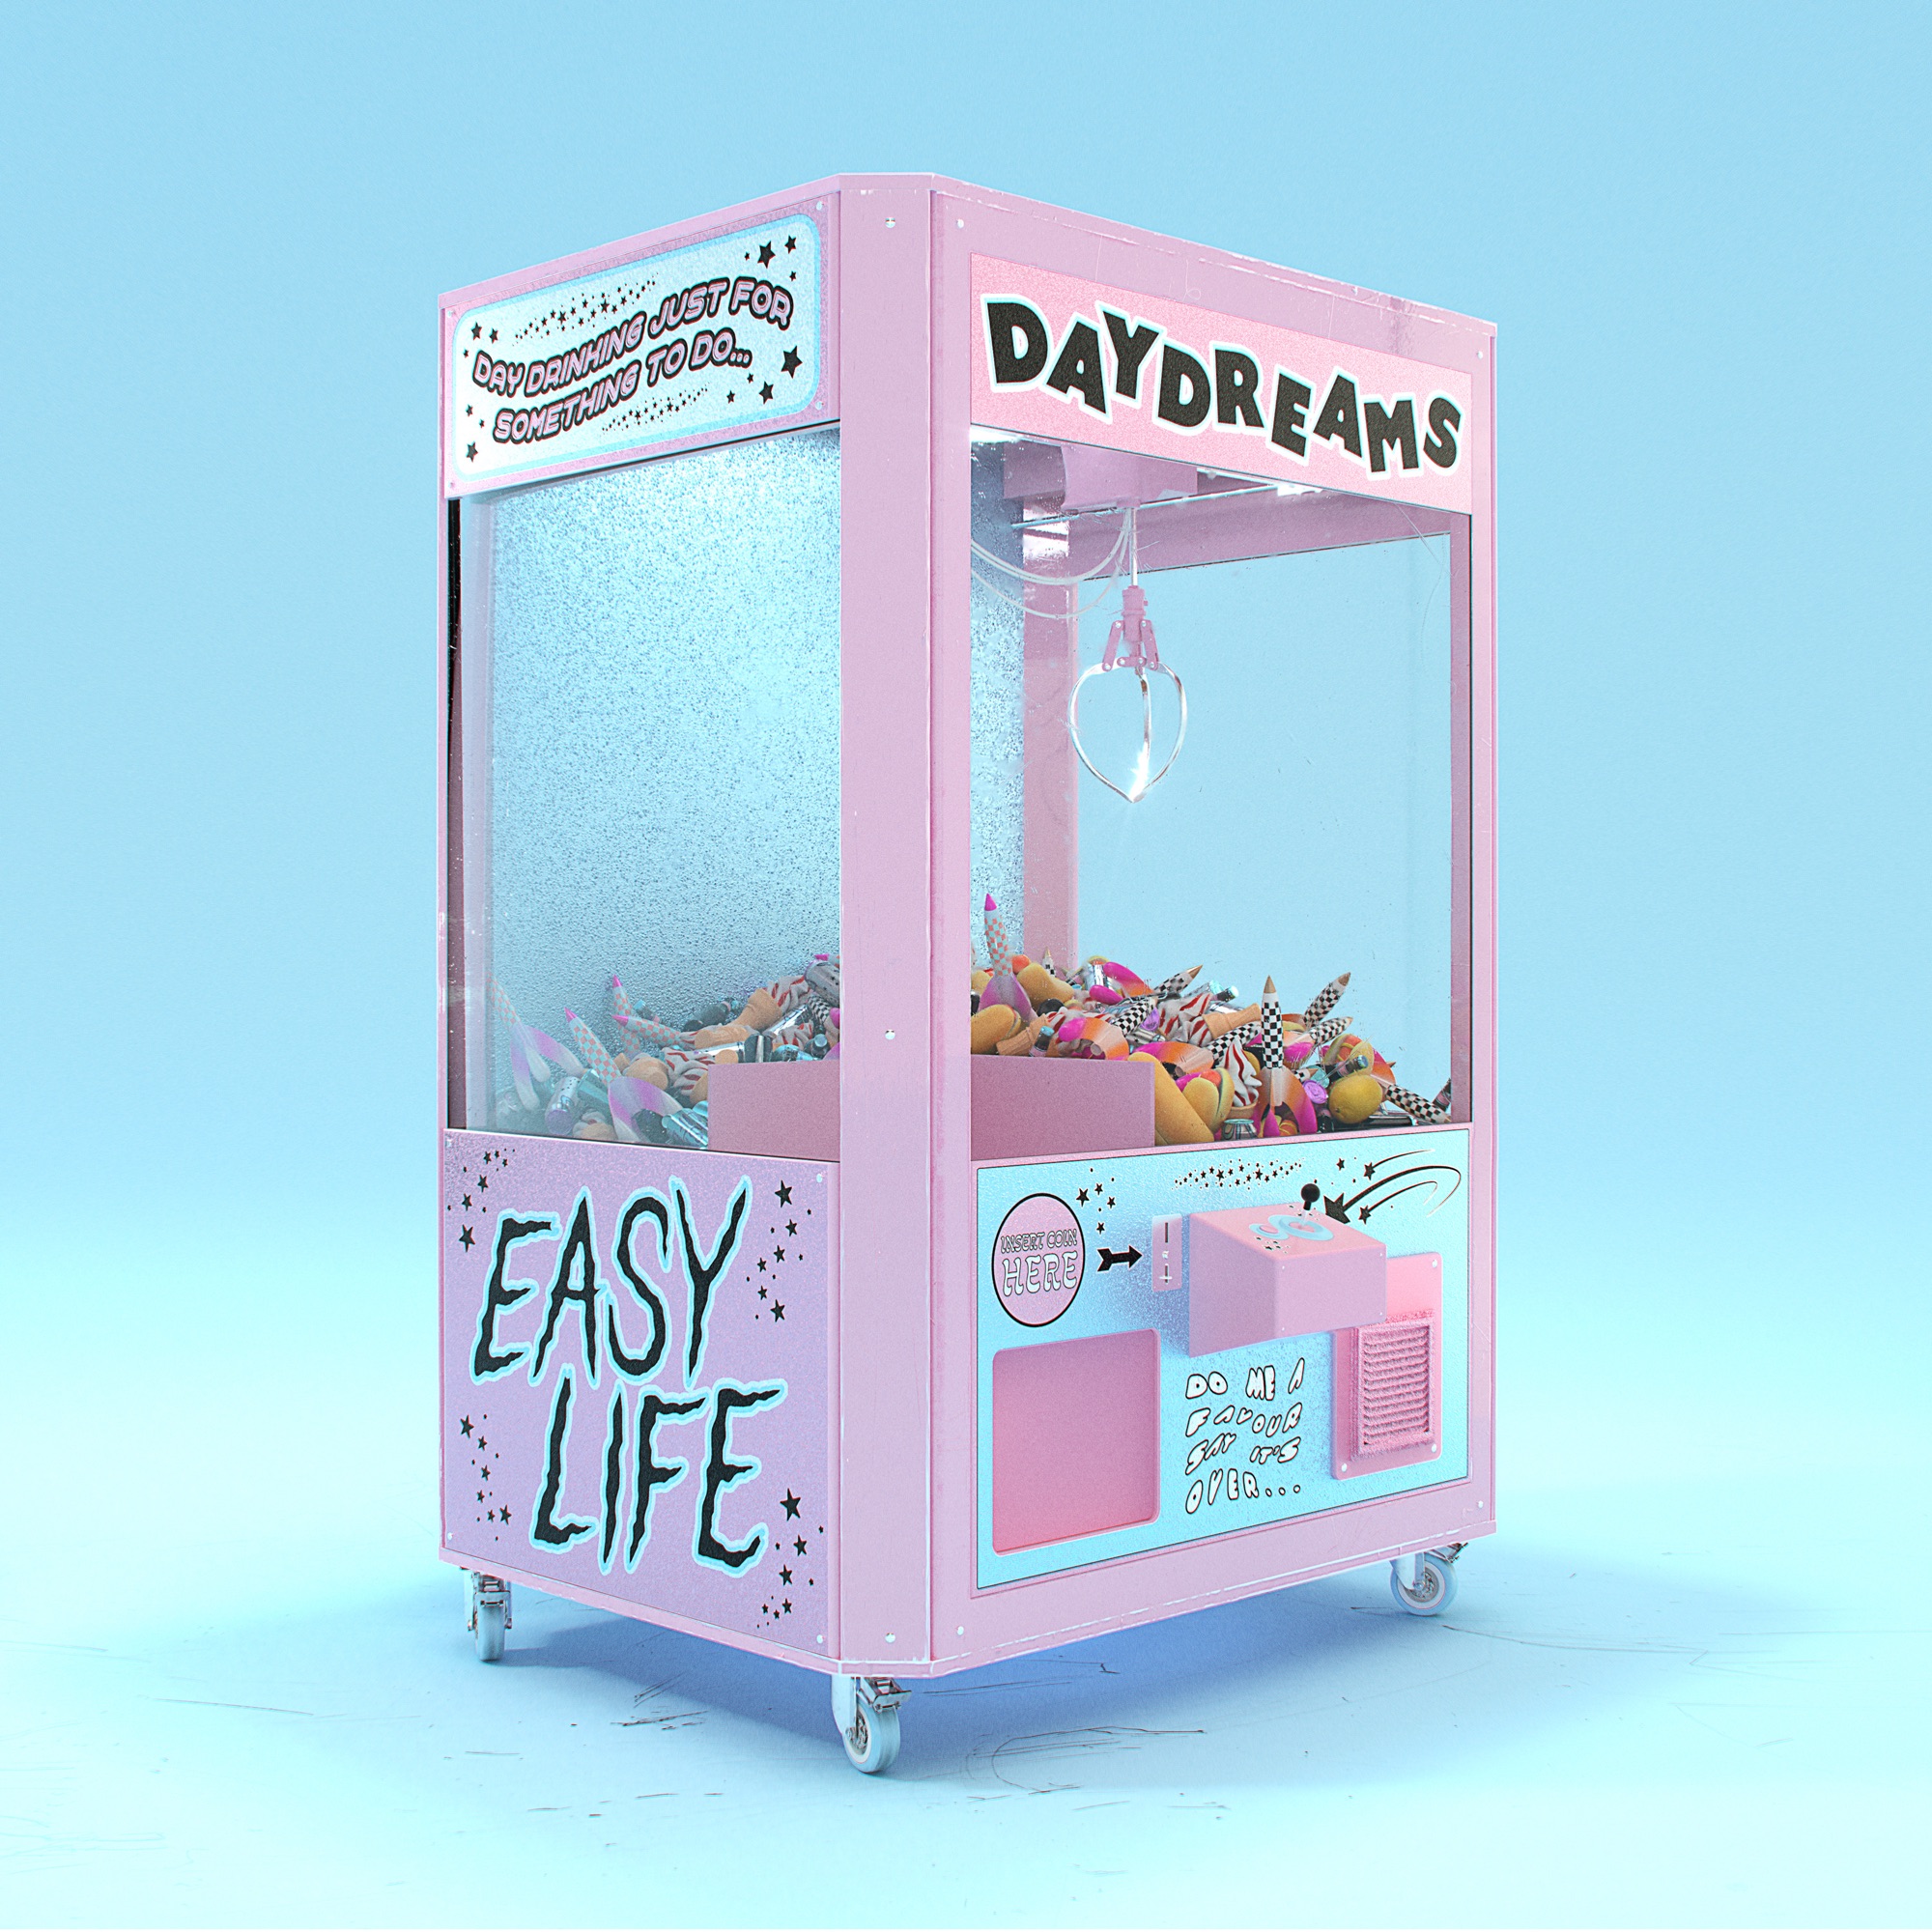 Easy Life - Daydreams - Single